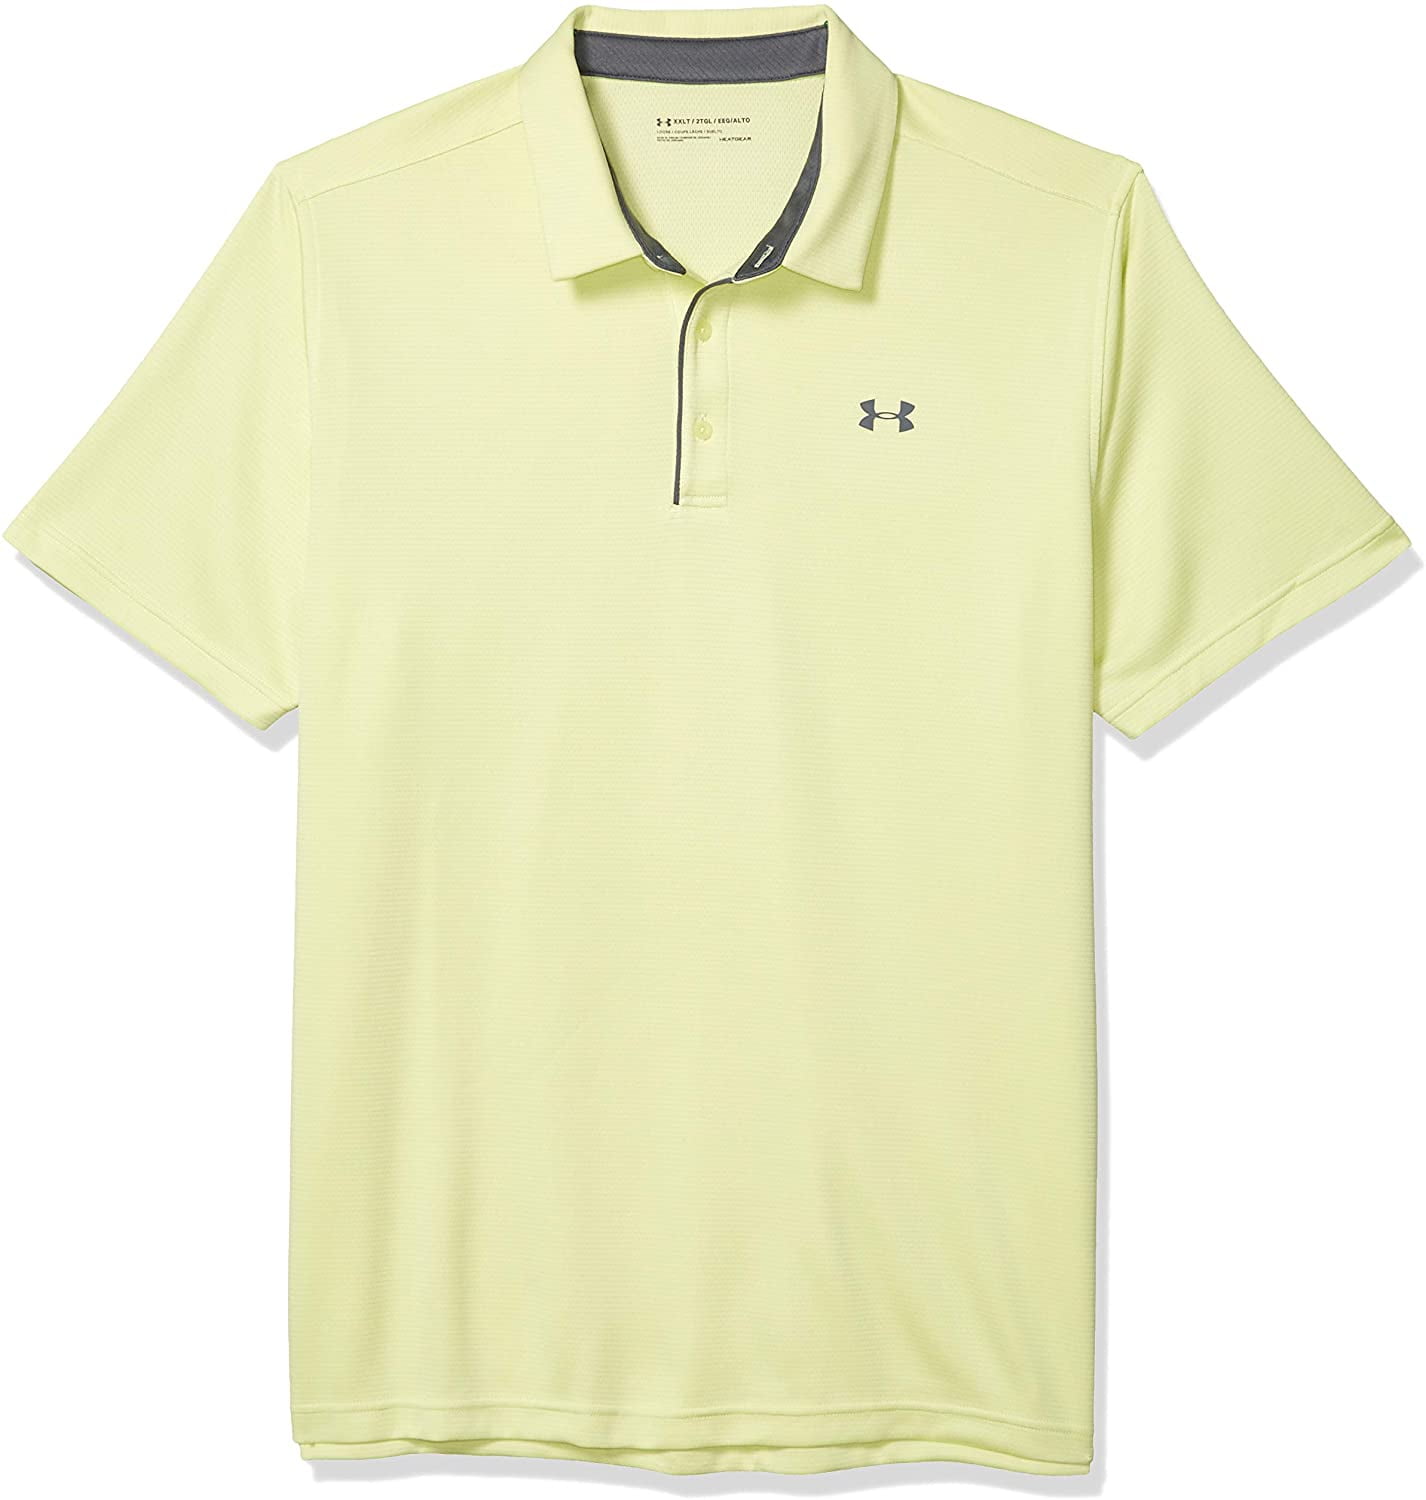 yellow under armour golf shirt